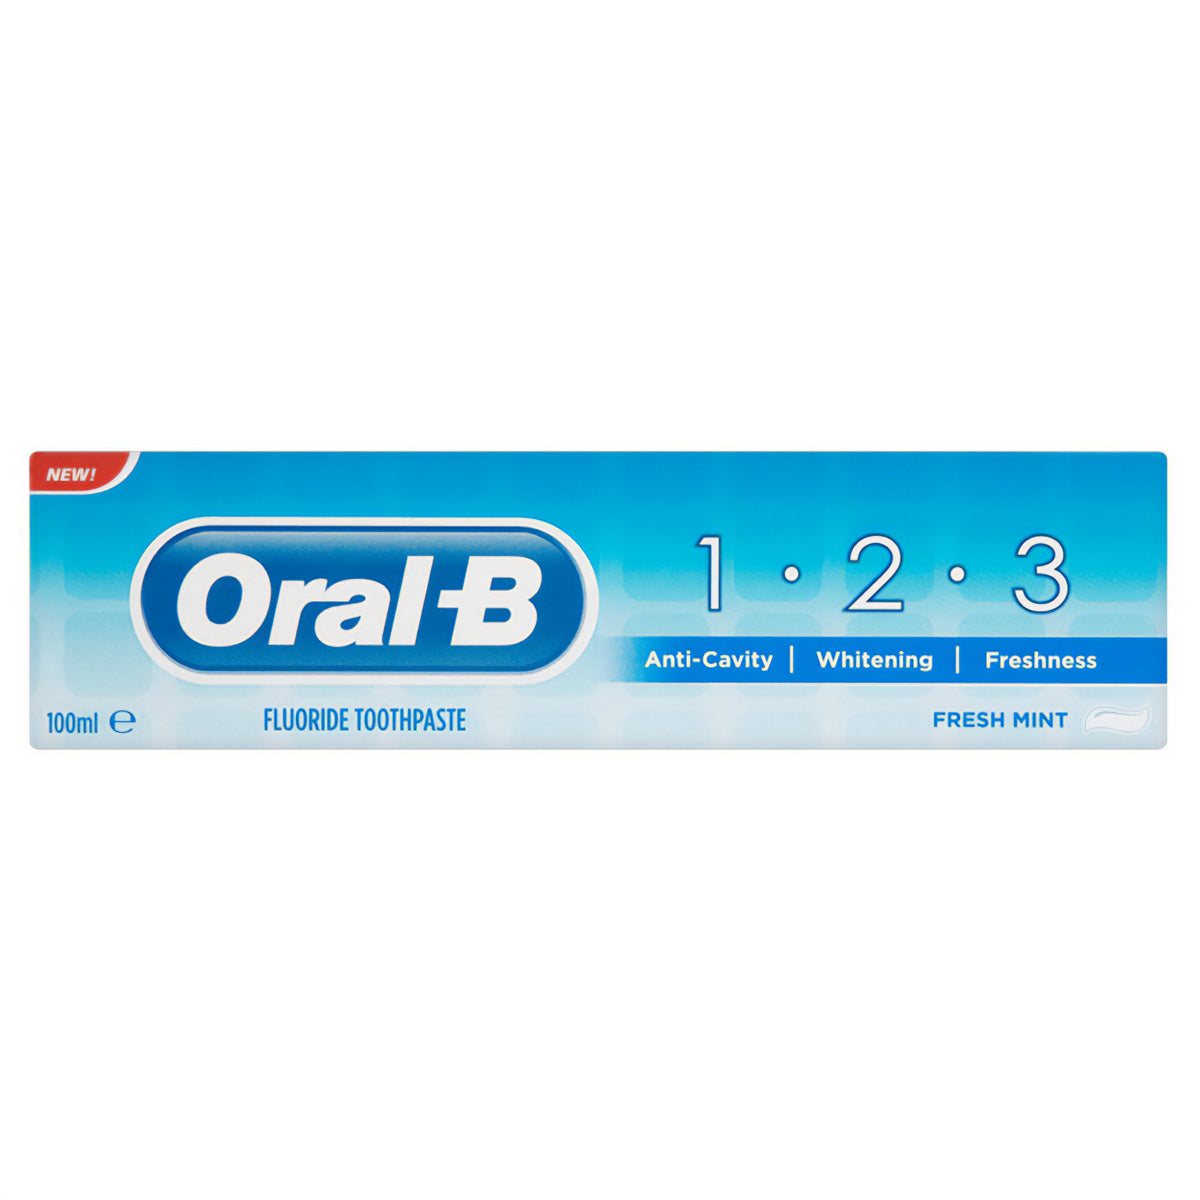 Oral-B - 1-2-3 Toothpaste - 100ml.